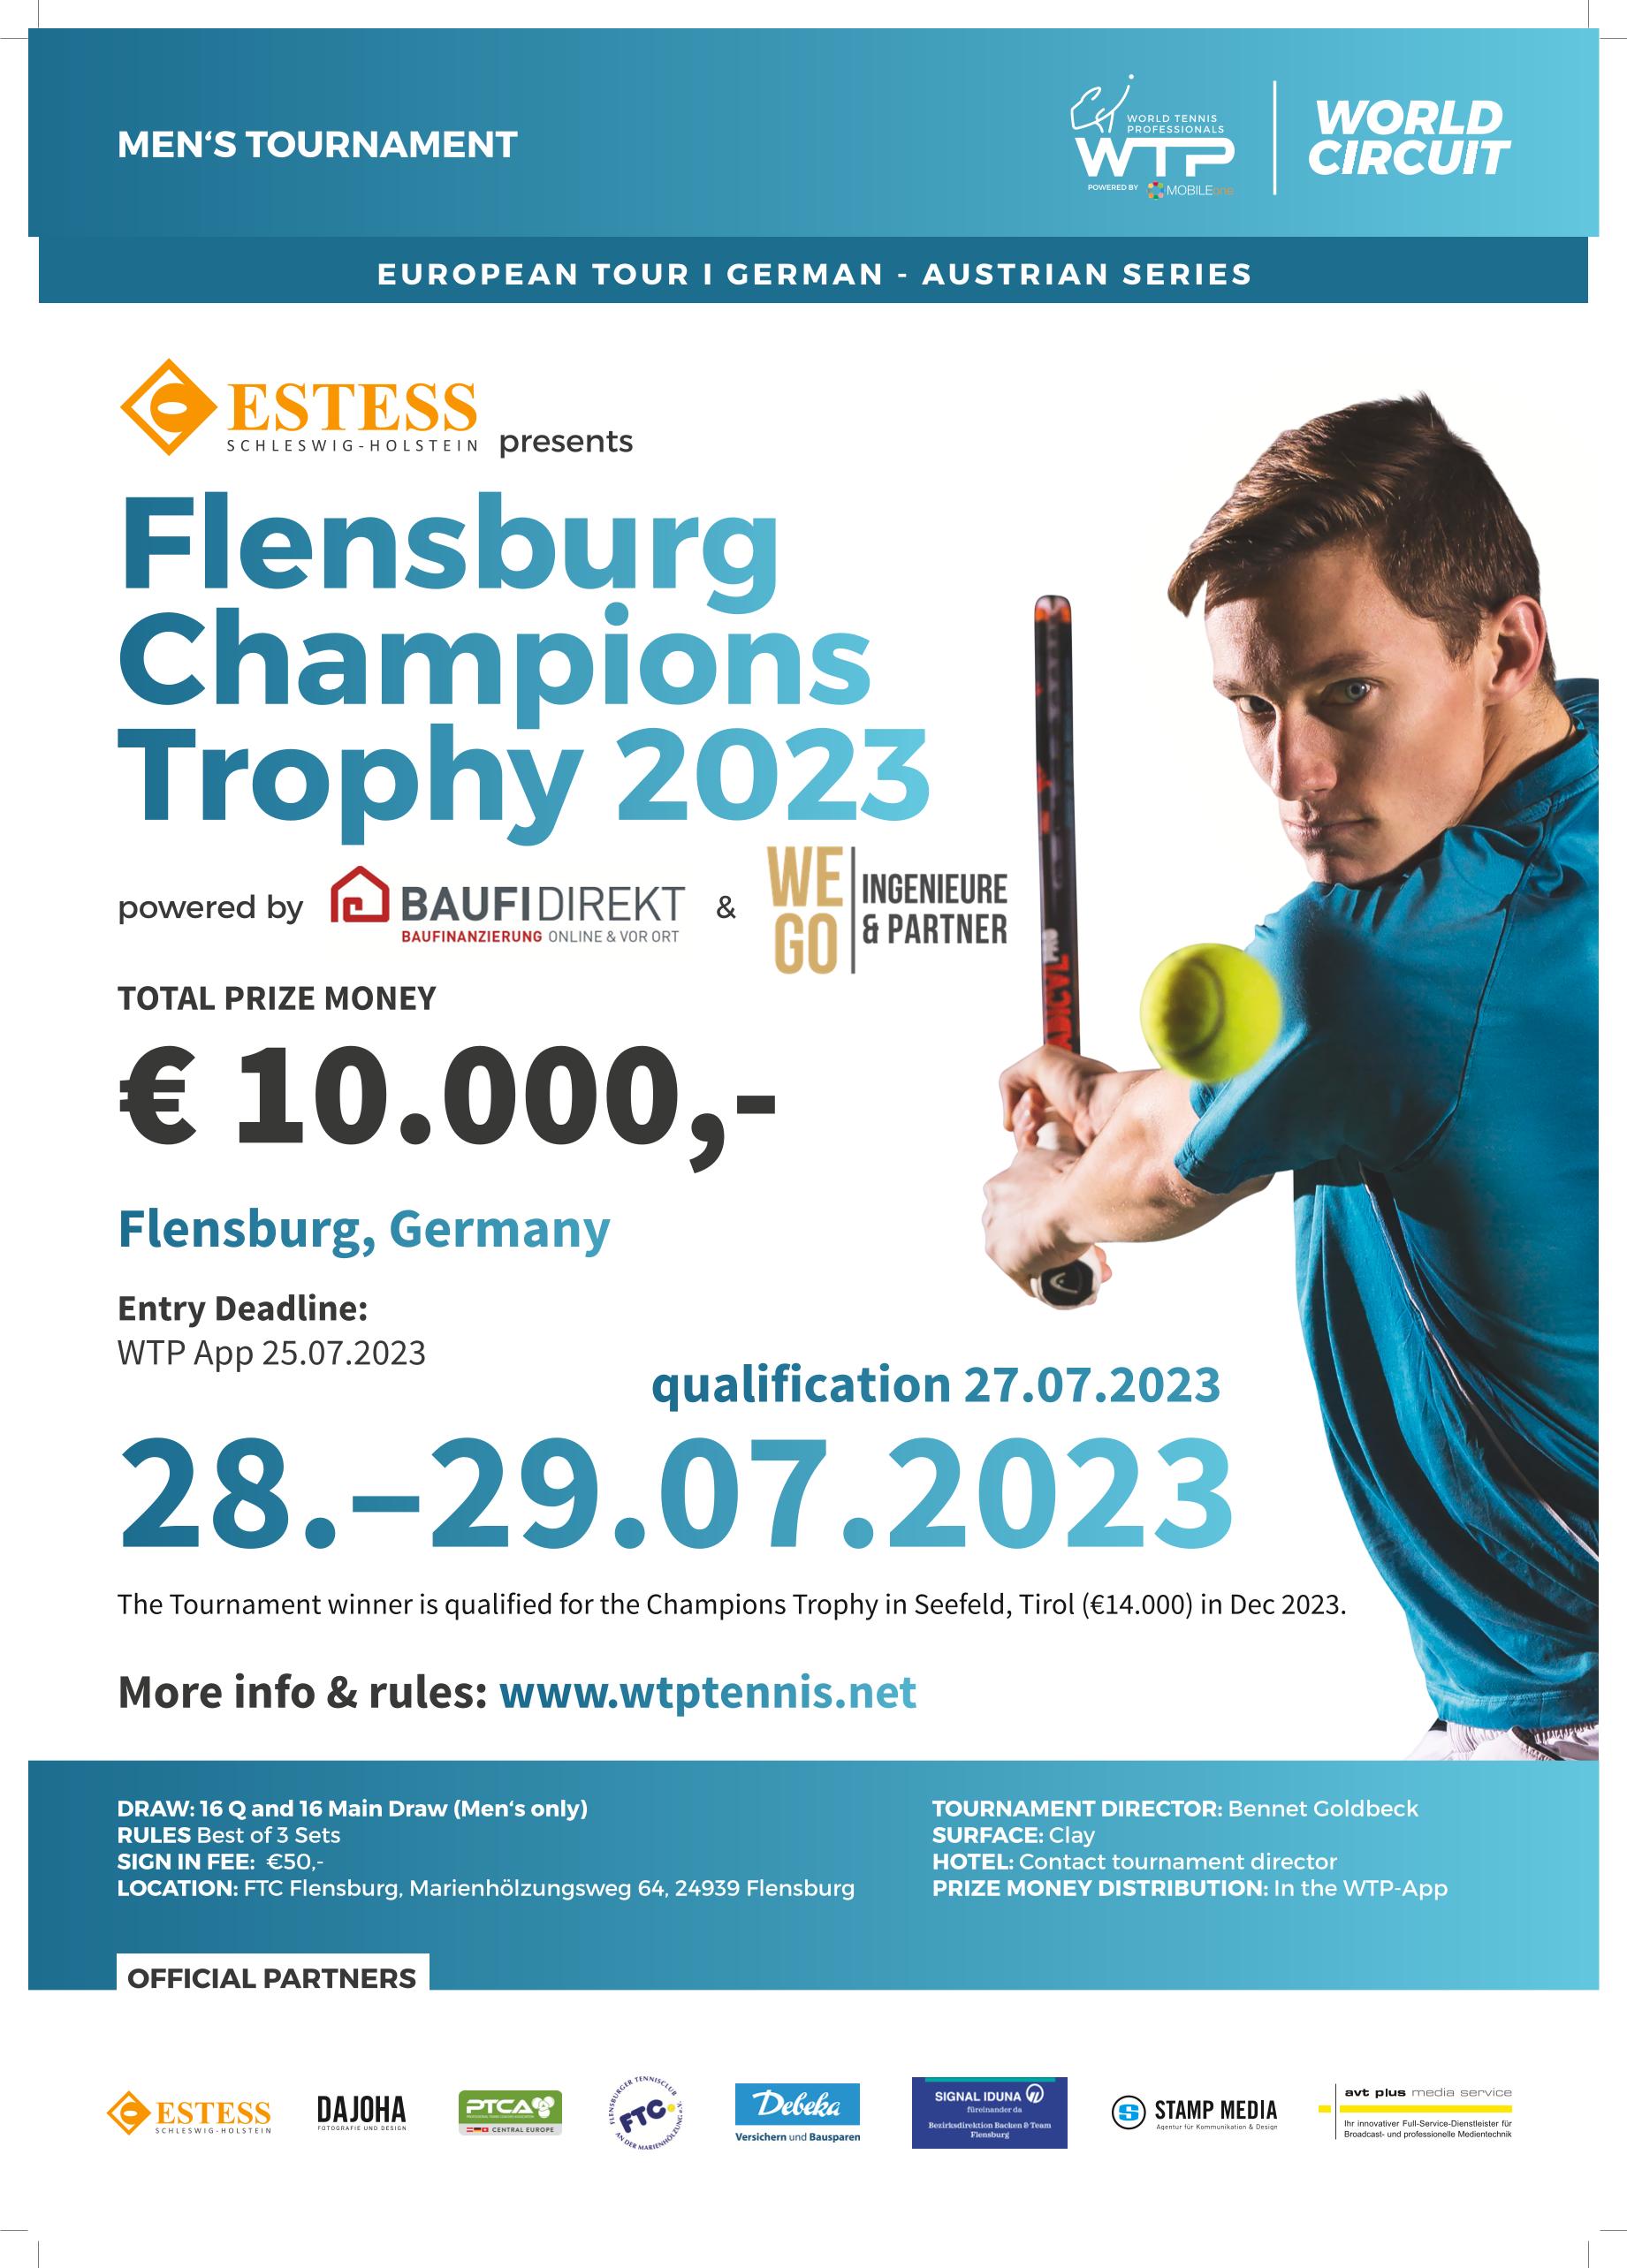 Flensburg Champions Trophy 2023